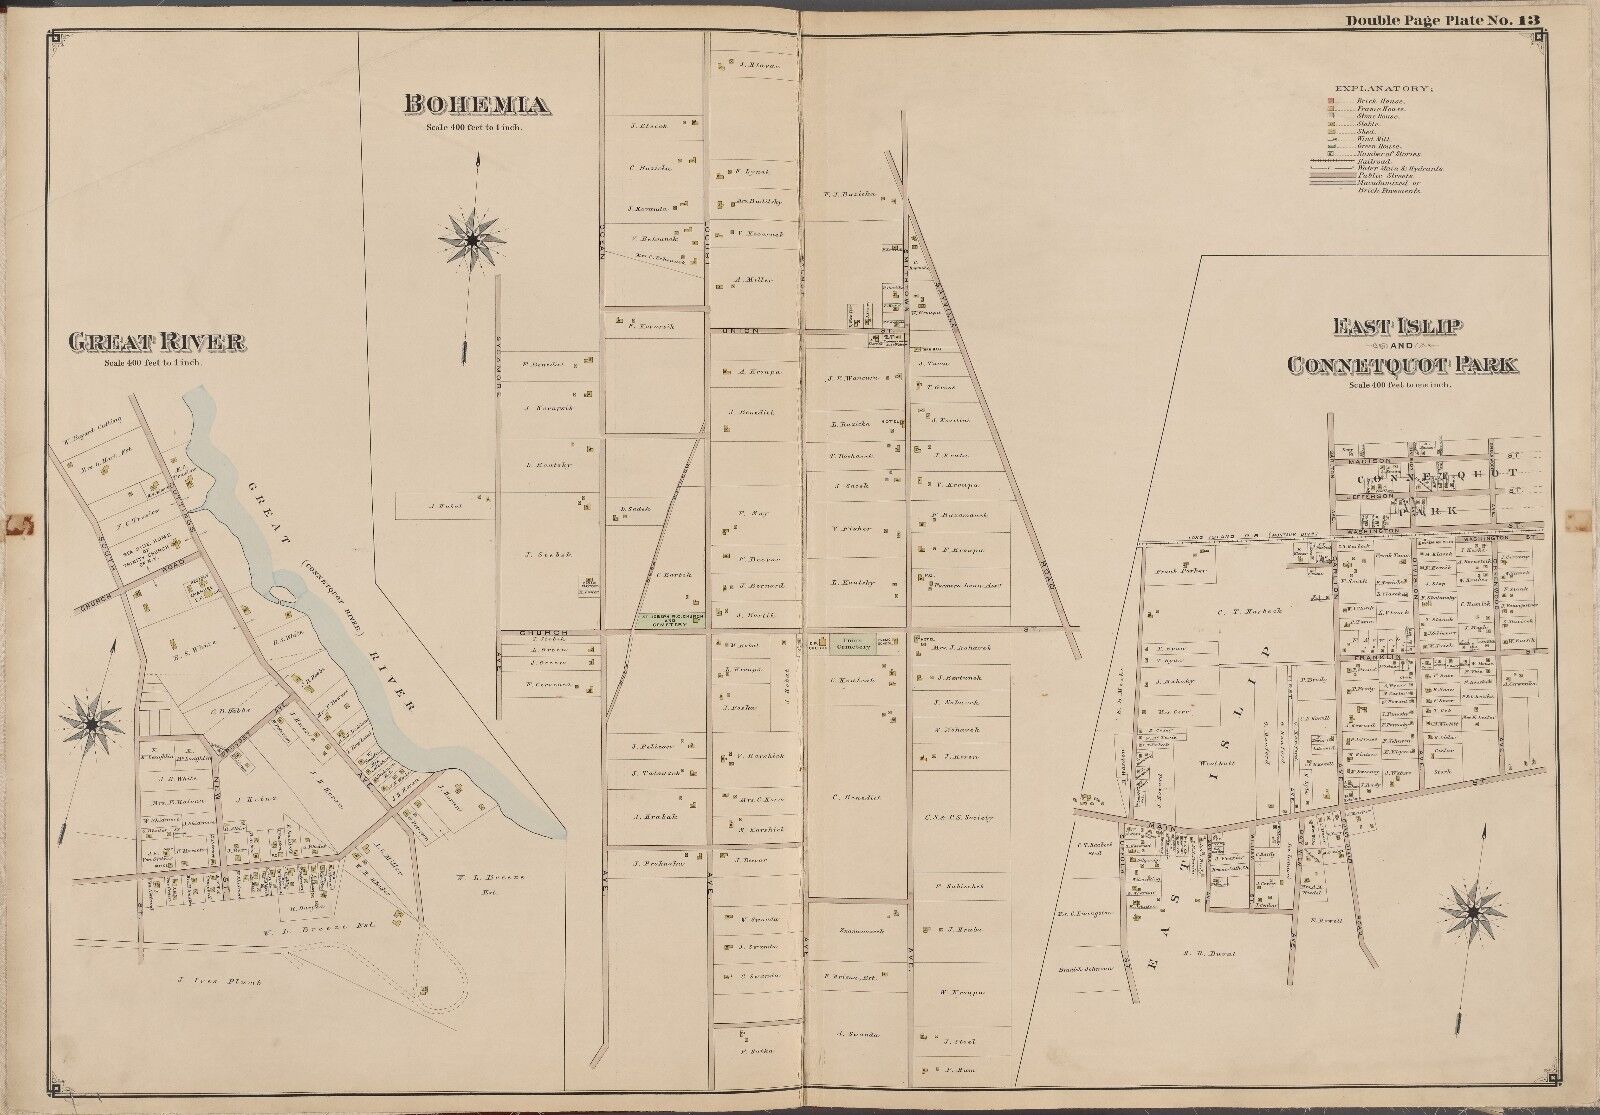 1902 GREAT RIVER BOHEMIA EAST ISLIP SUFFOLK COUNTY LONG ISLAND NY ATLAS MAP